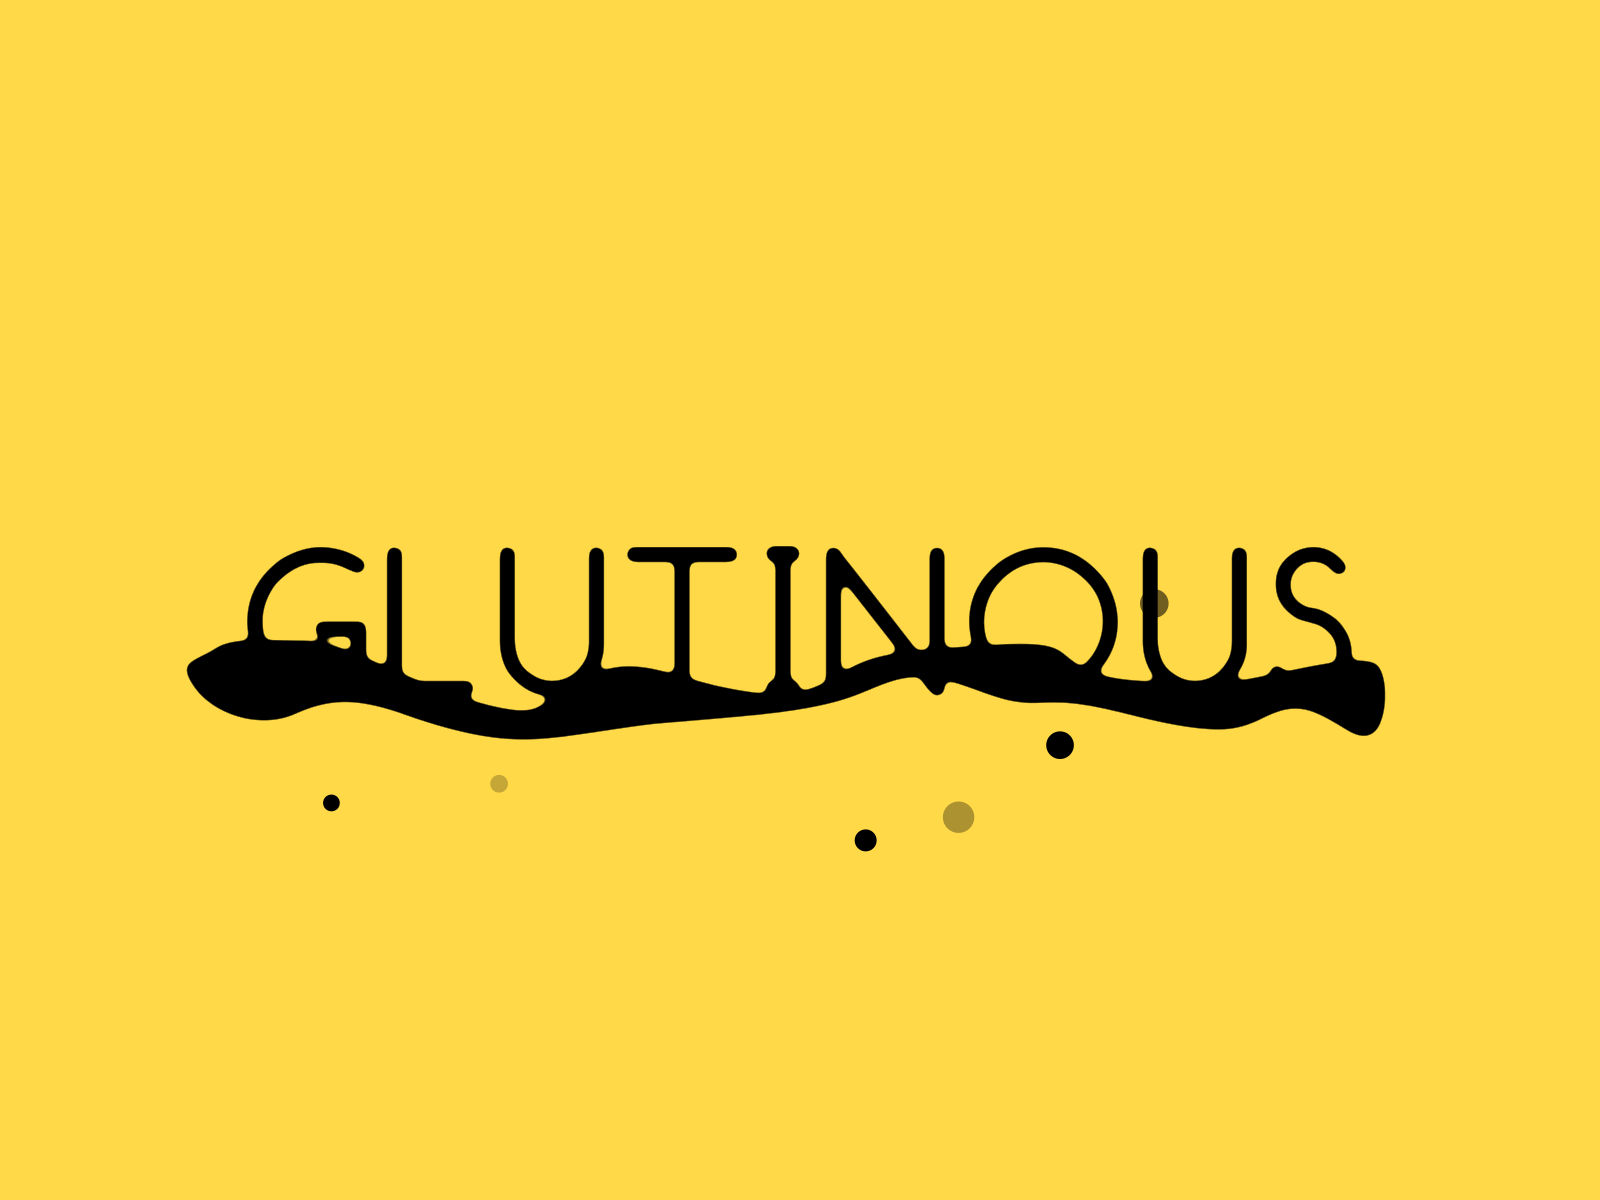 黏糊糊-glutinous animation glutinous kouroupakis logo text 口香糖